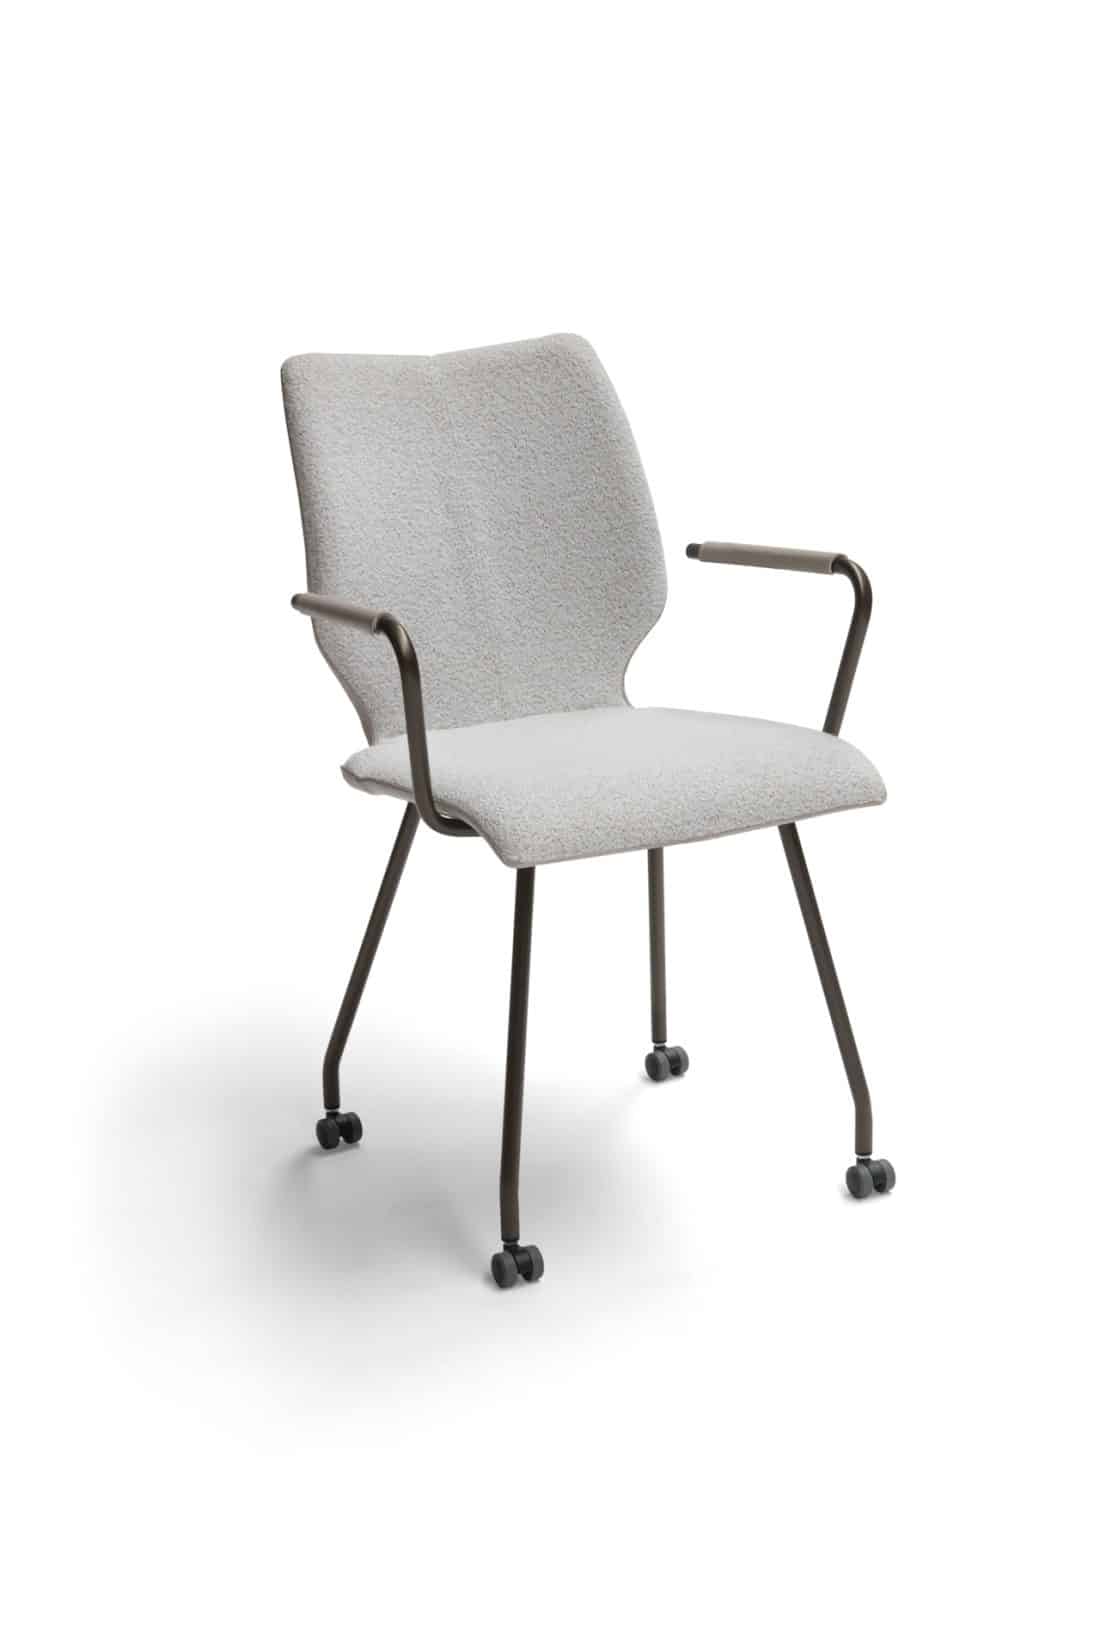 Santi Arm Dining Chair On Wheels With Armrest Fabric White Breesnewworld